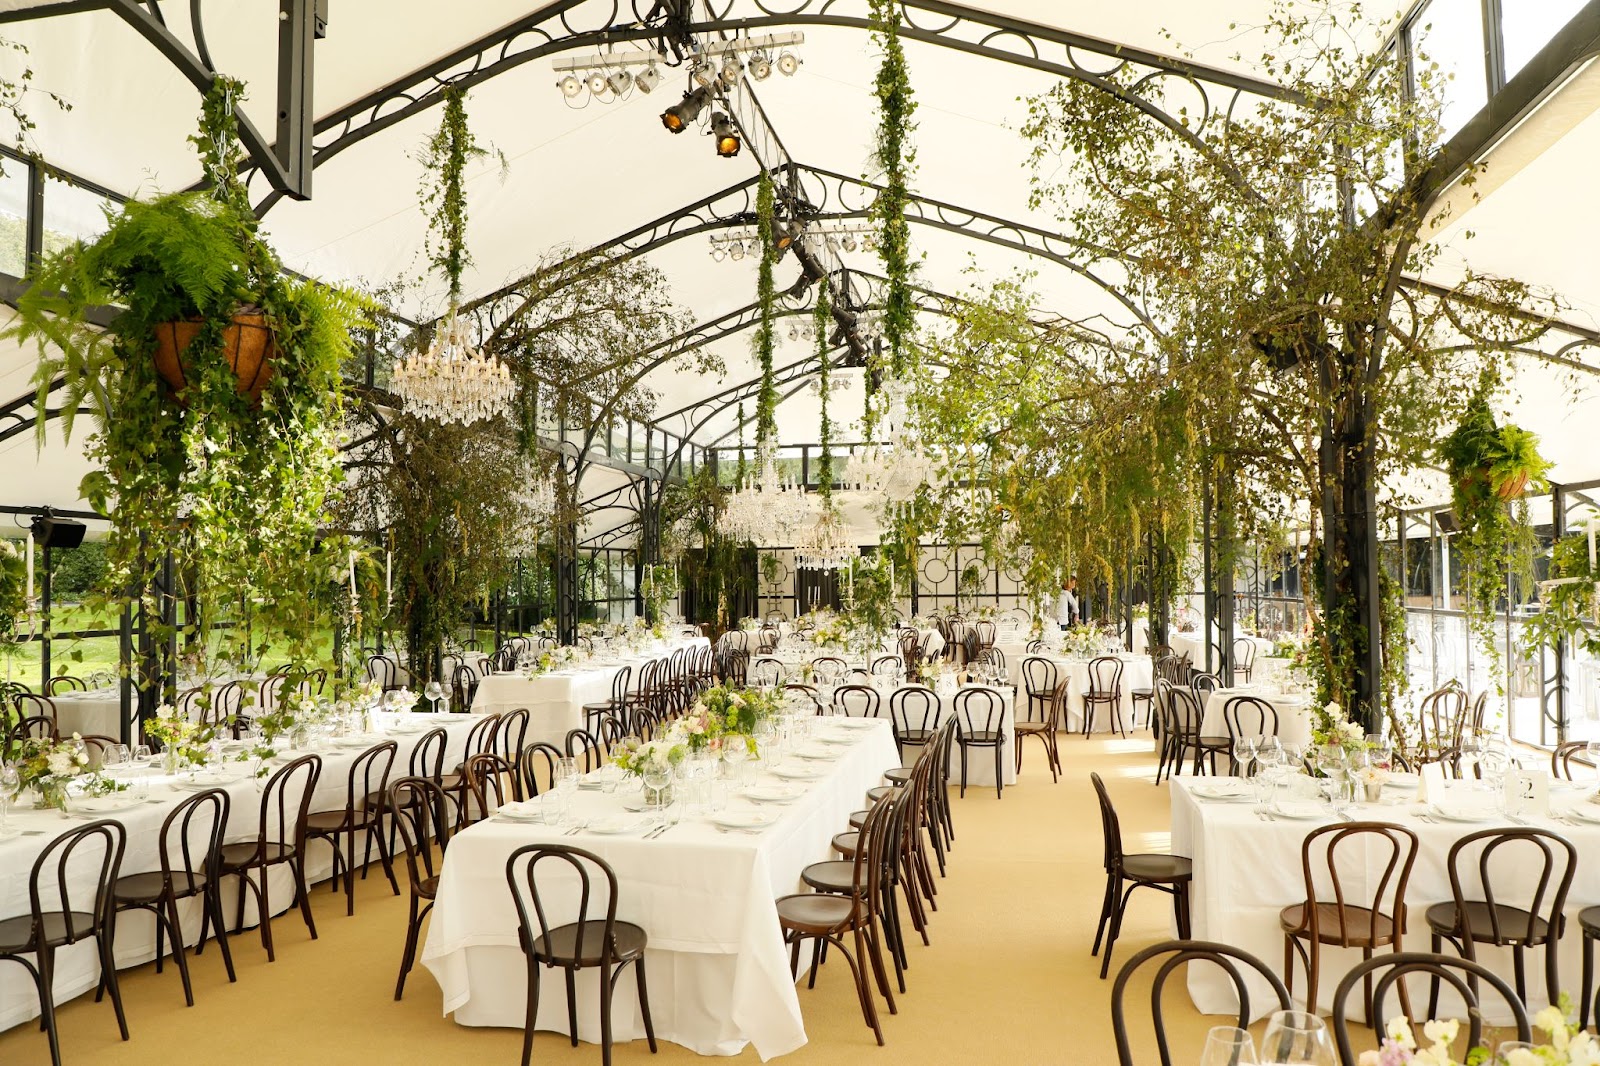 A stunning wedding reception where nature meets luxury.